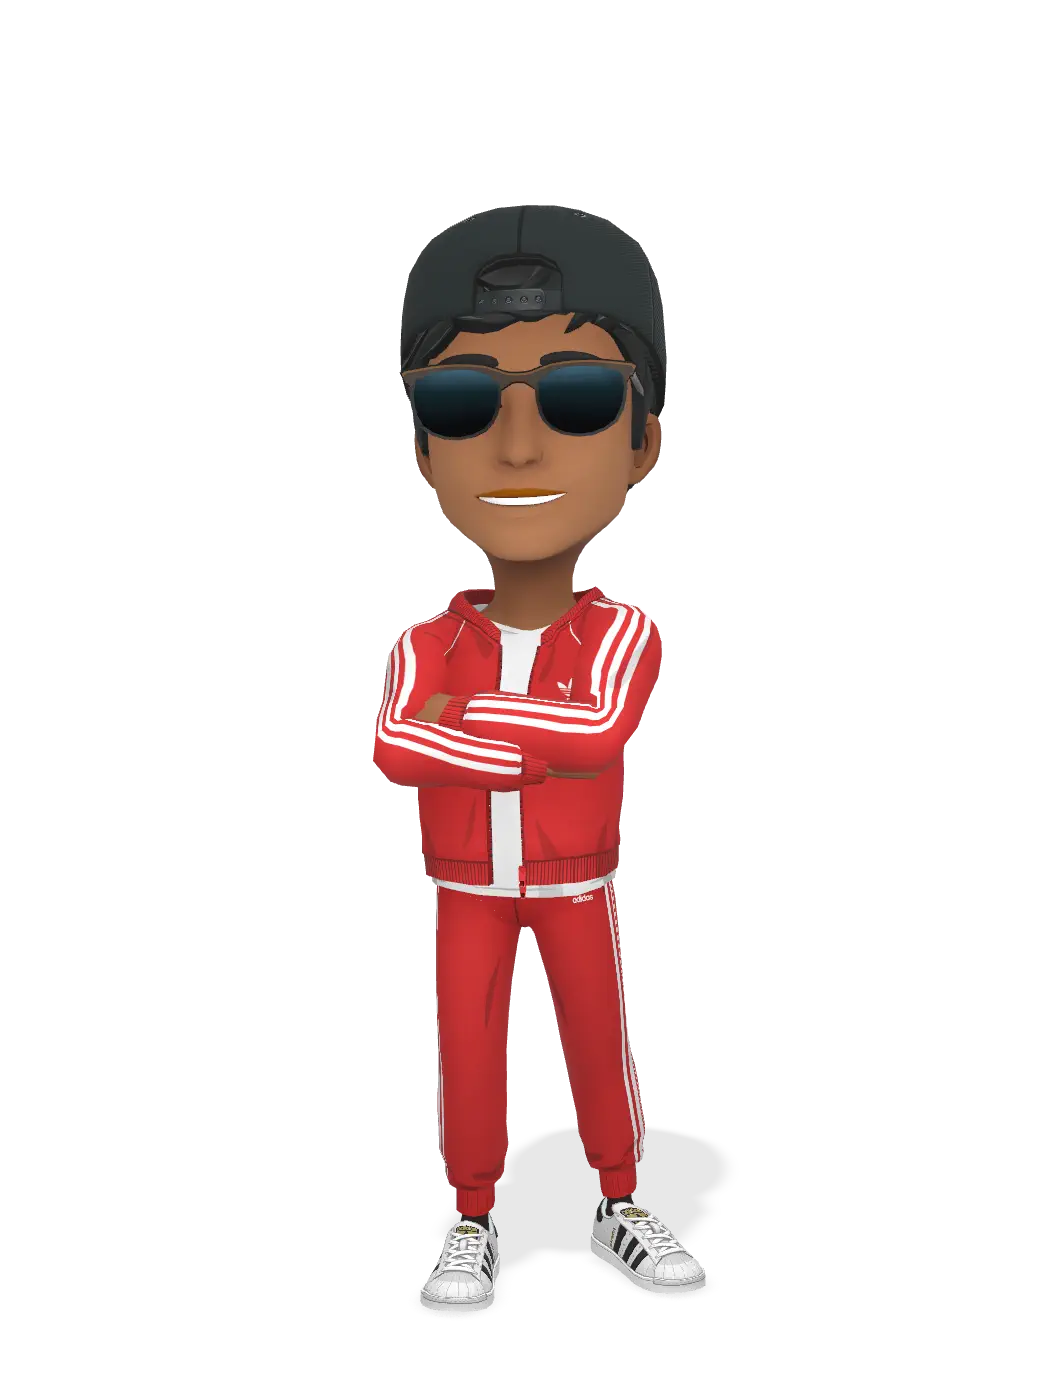 3D Bitmoji for tyrellterry3 avatar